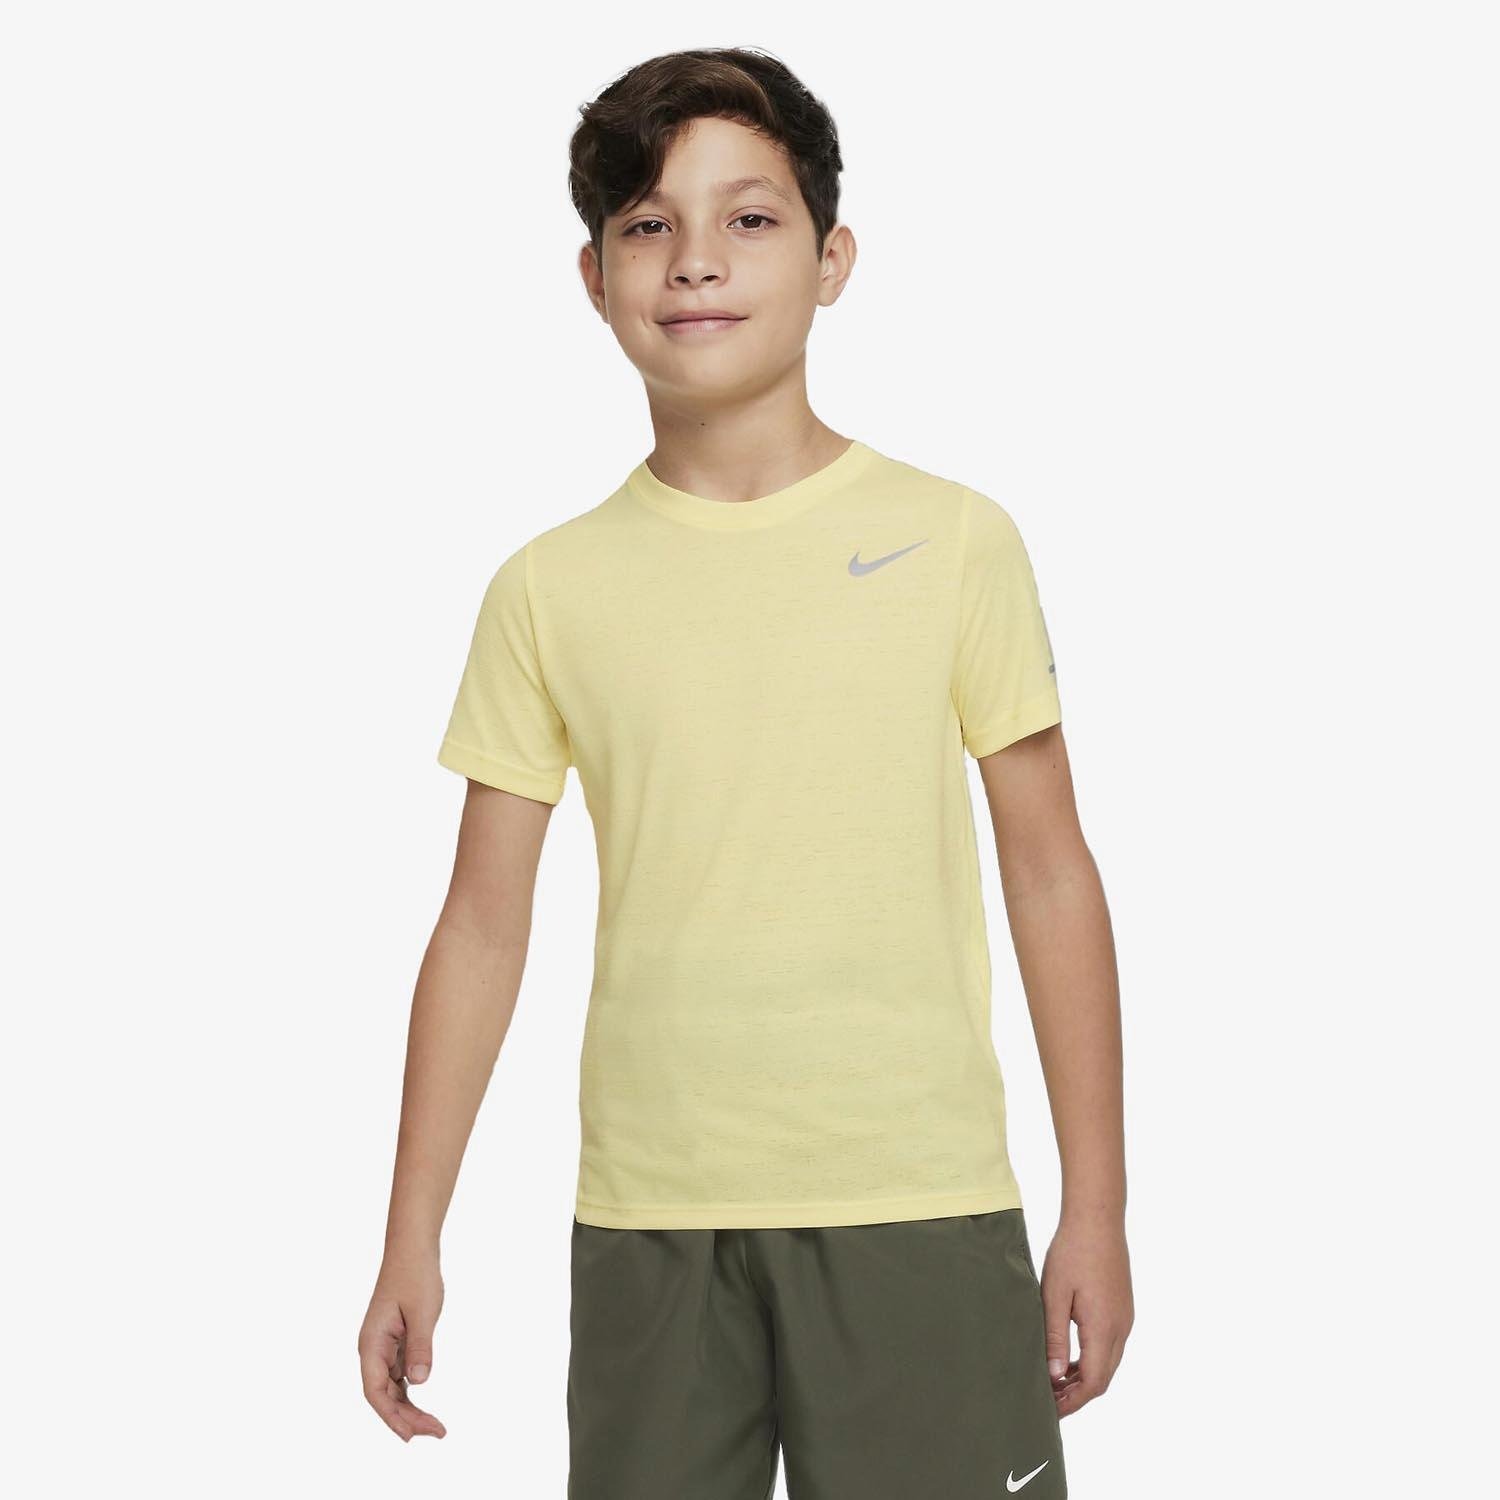 Nike Nike miler hardloopshirt geel kinderen kinderen